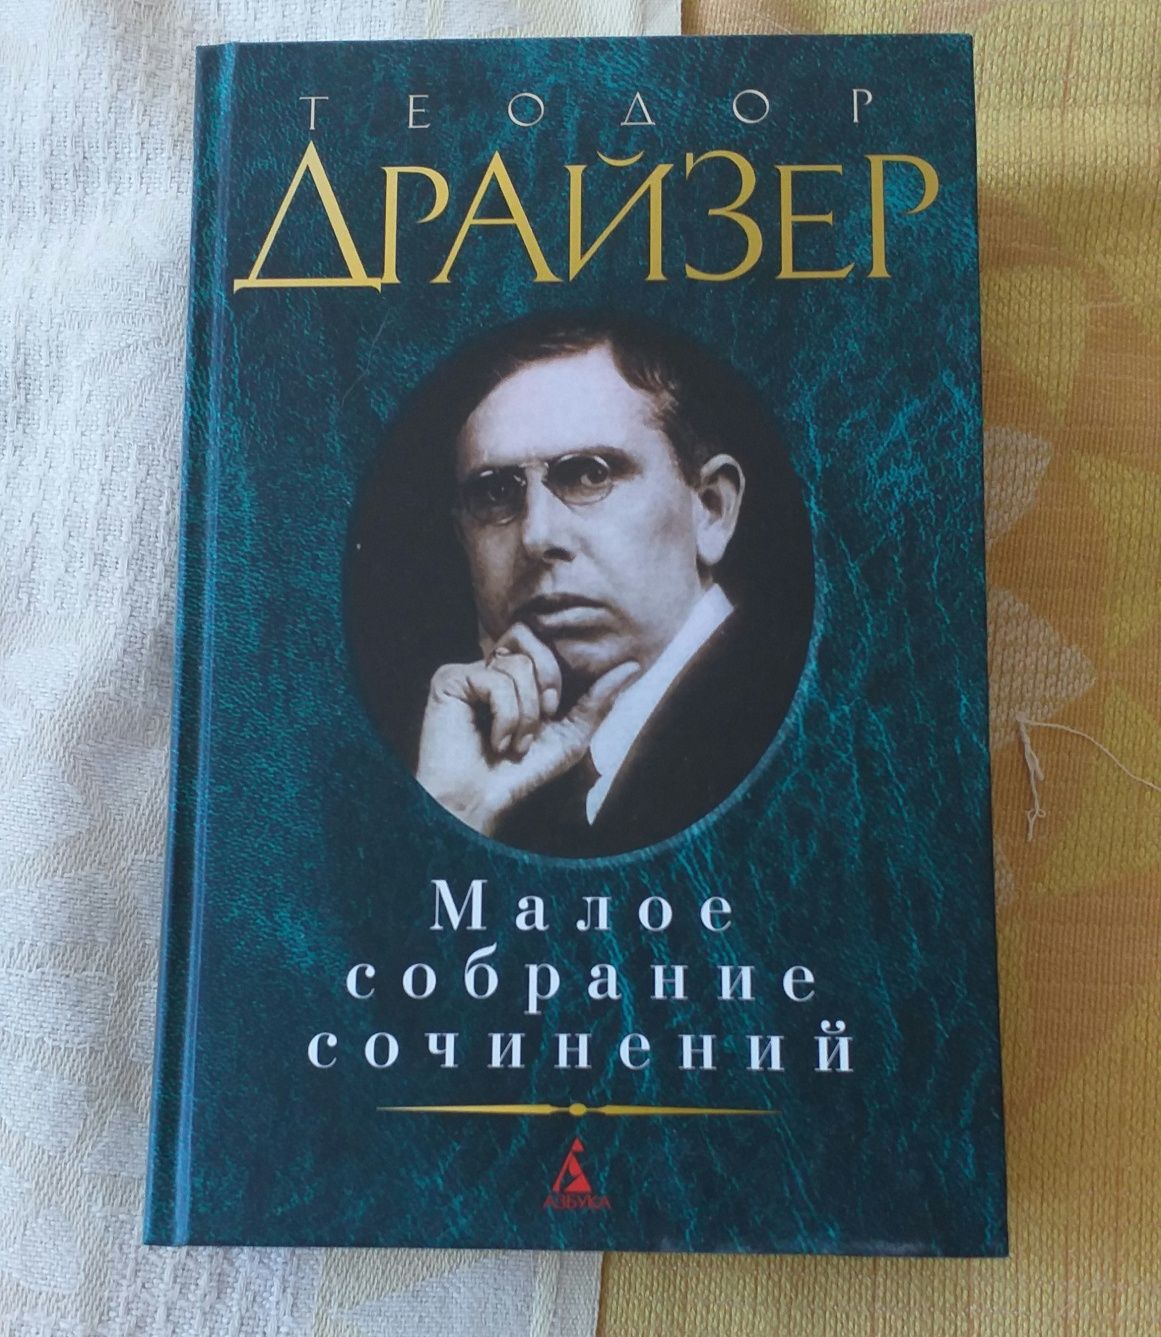 Теодор Драйзер "Собрание сочинений"